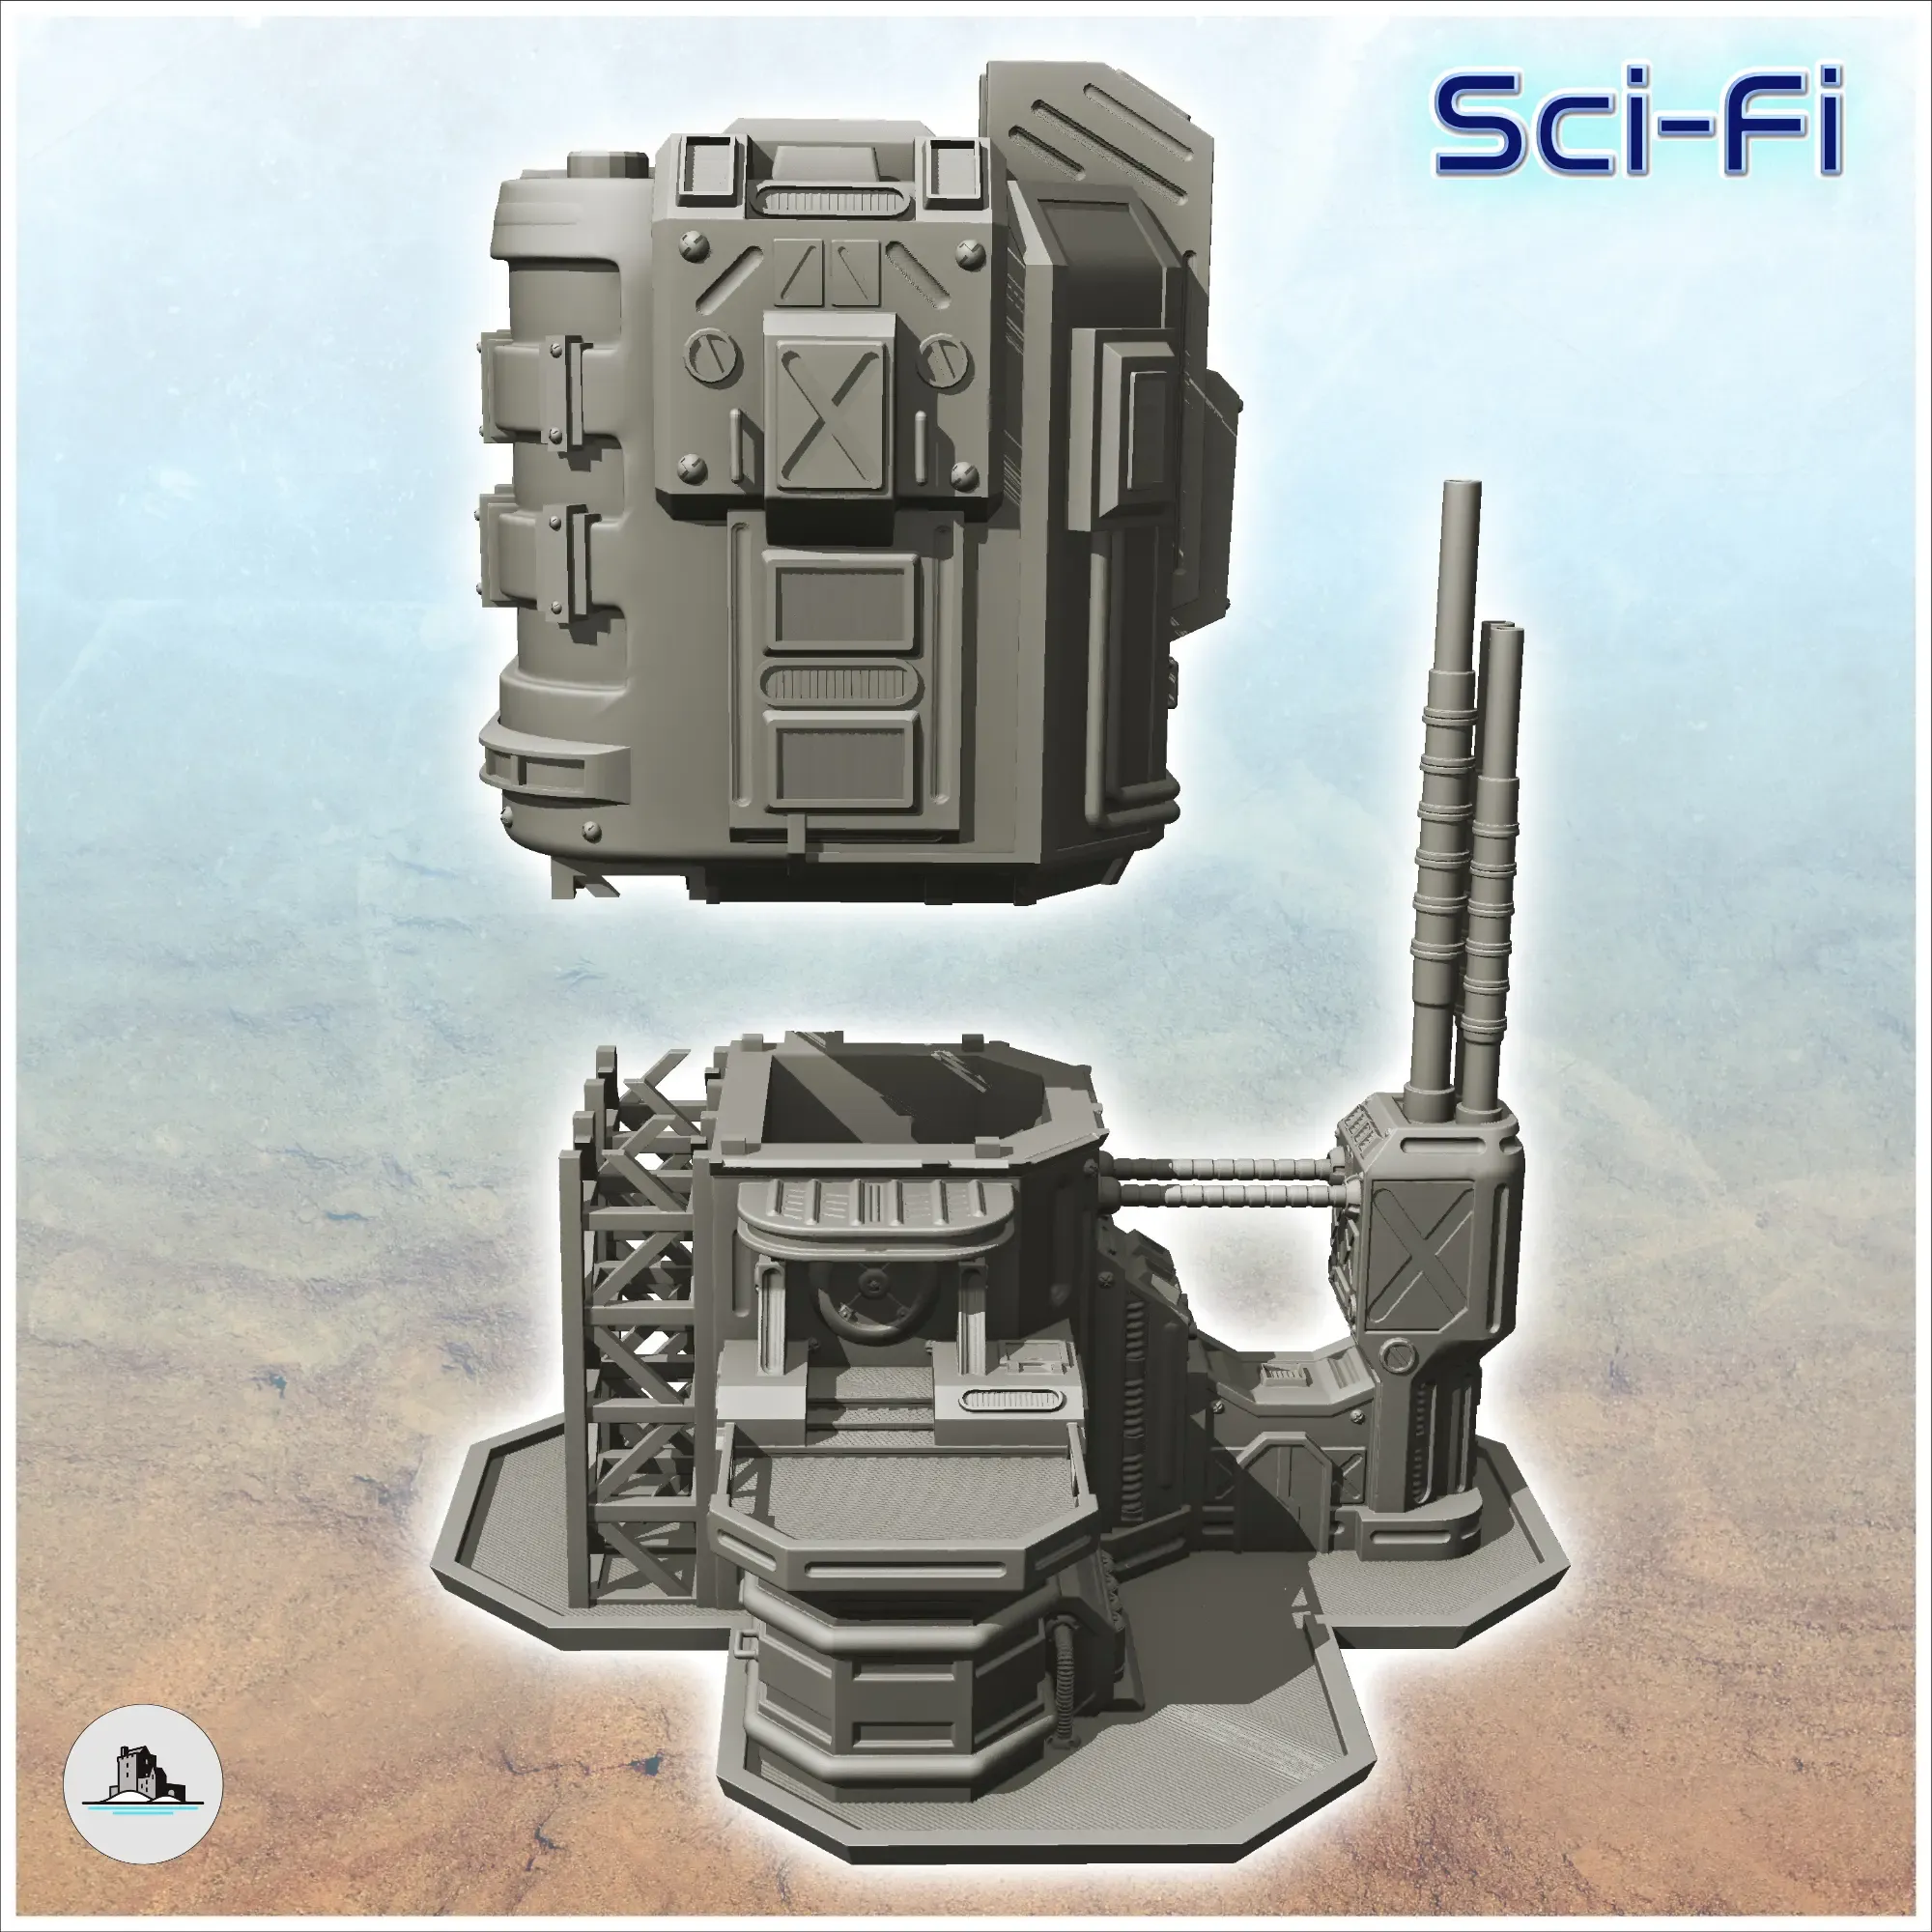 Sci-Fi industrial structure - Terrain Science fiction SF